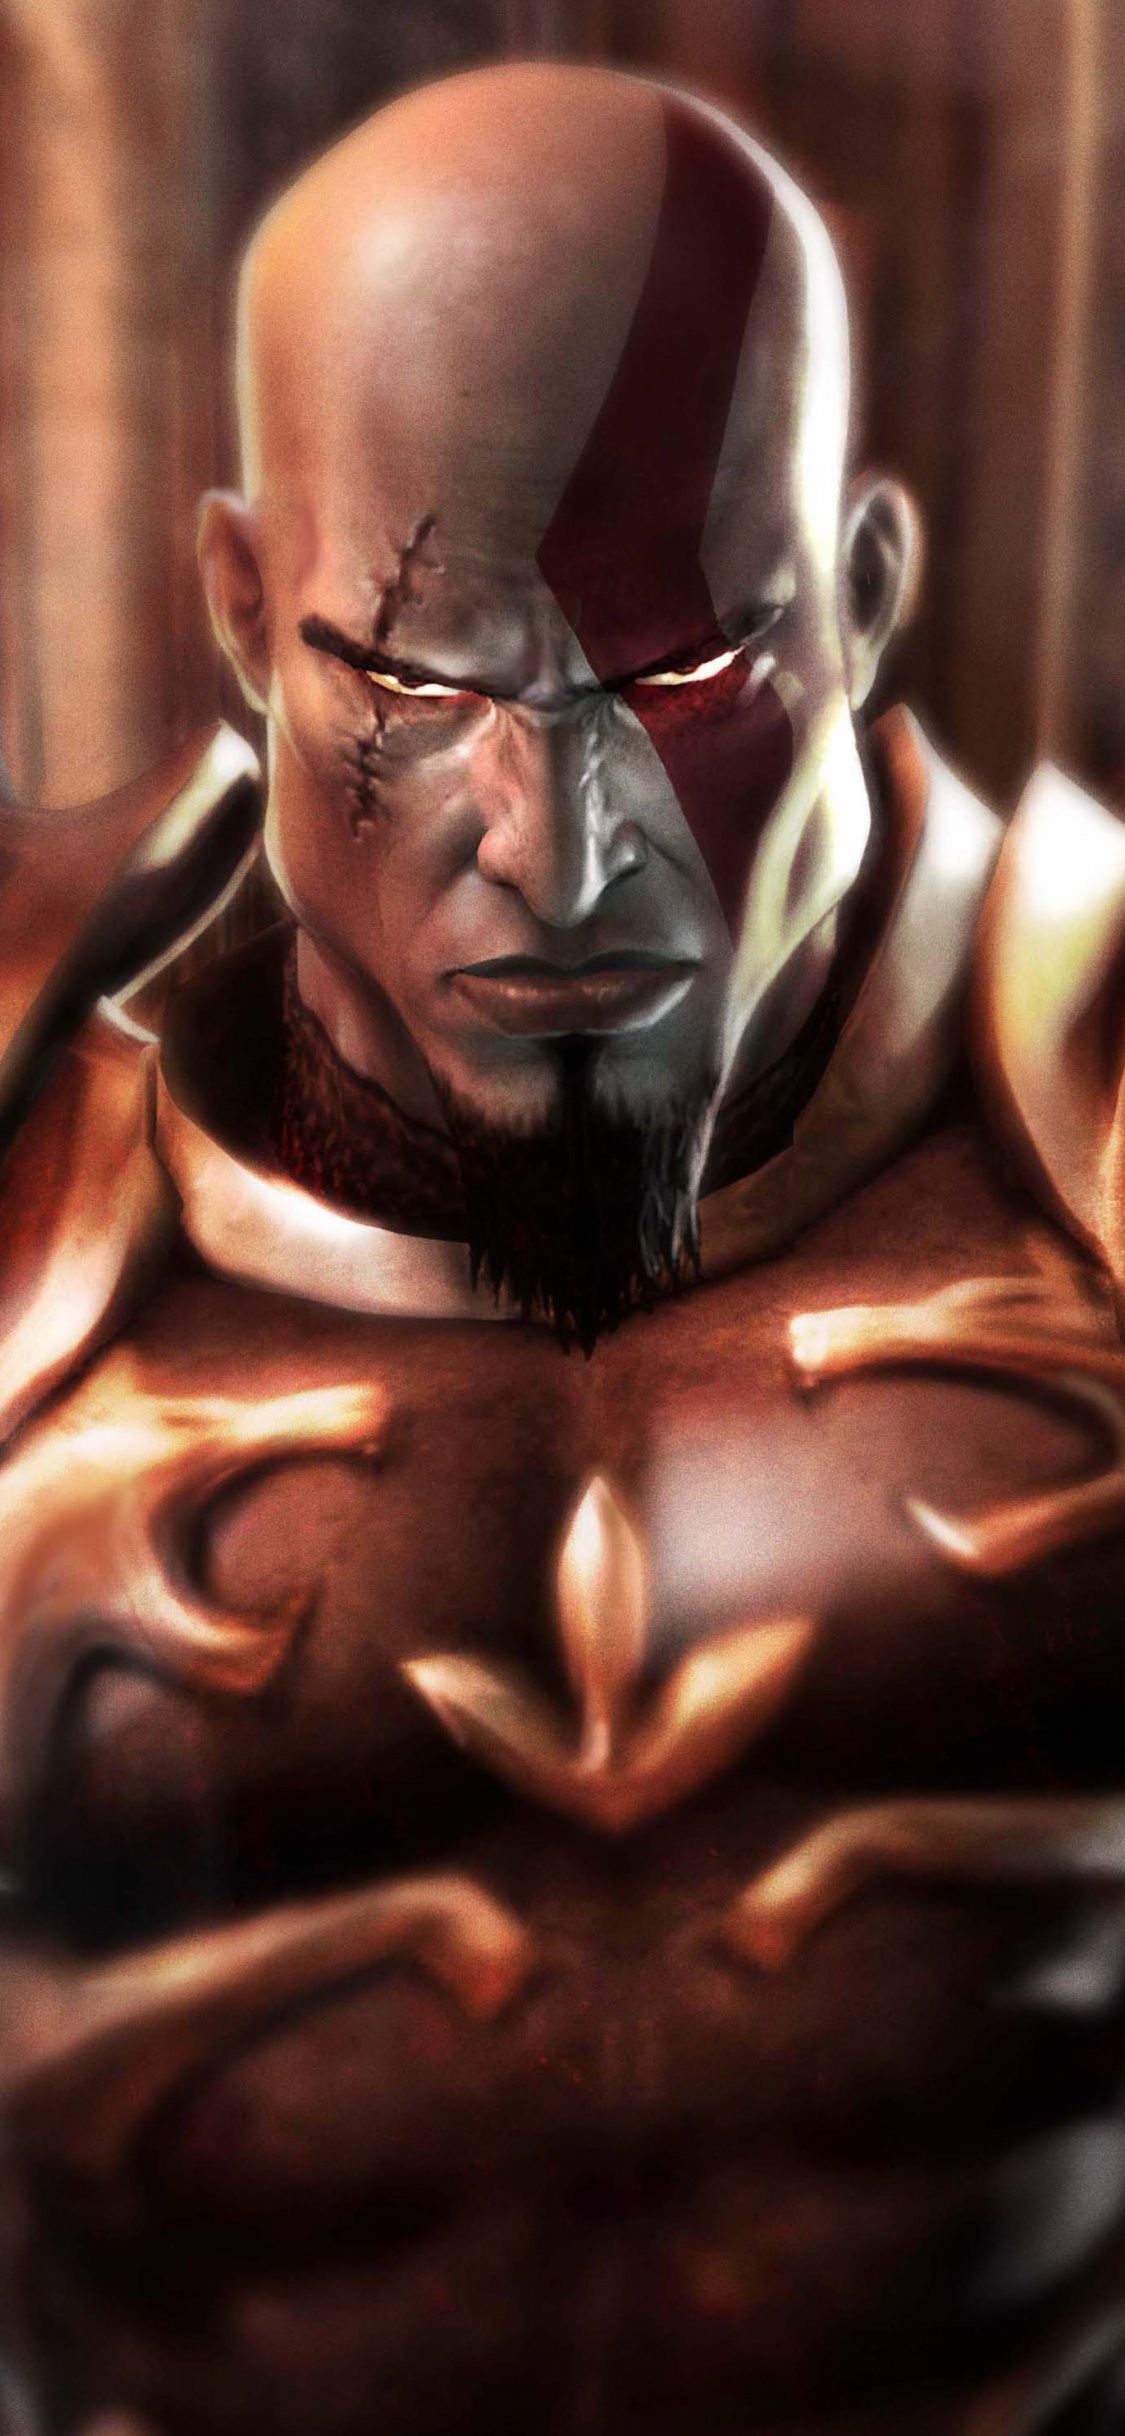 Kratos, video game, God of War wallpaper, 5378x HD image, picture, e4d5a0c6